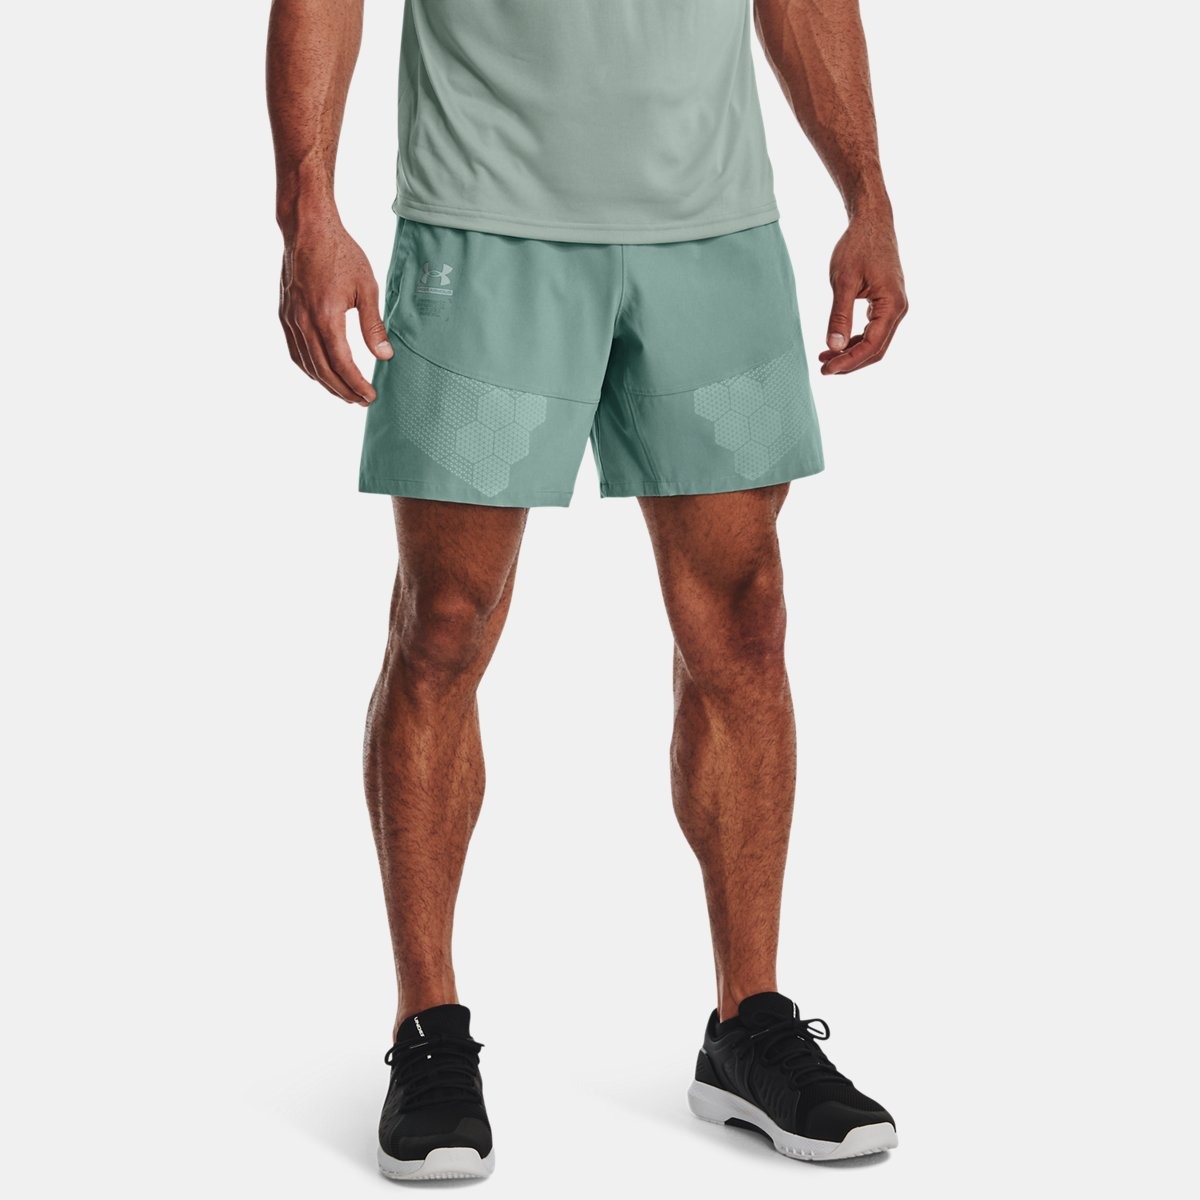 Under Armour - Green Shorts Man GOOFASH